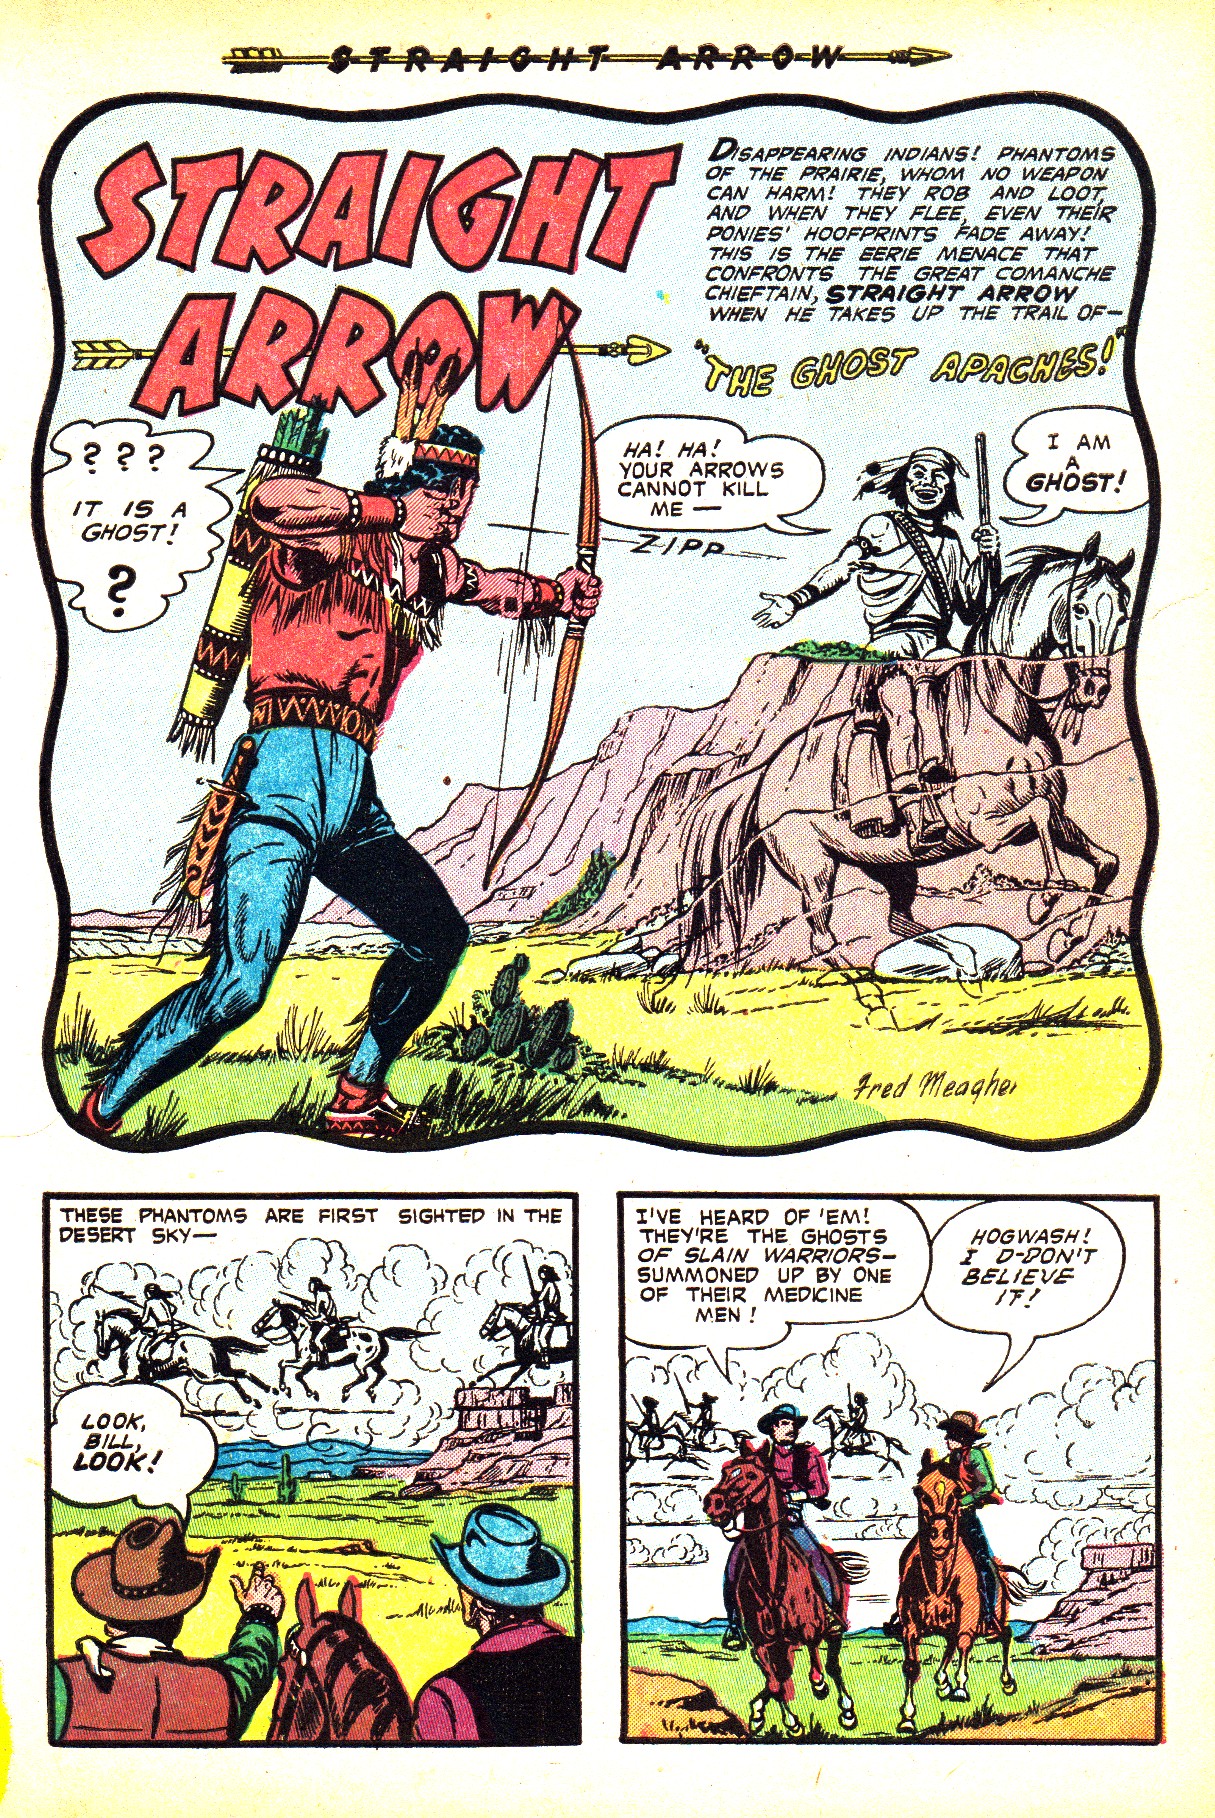 Read online Straight Arrow comic -  Issue #30 - 3